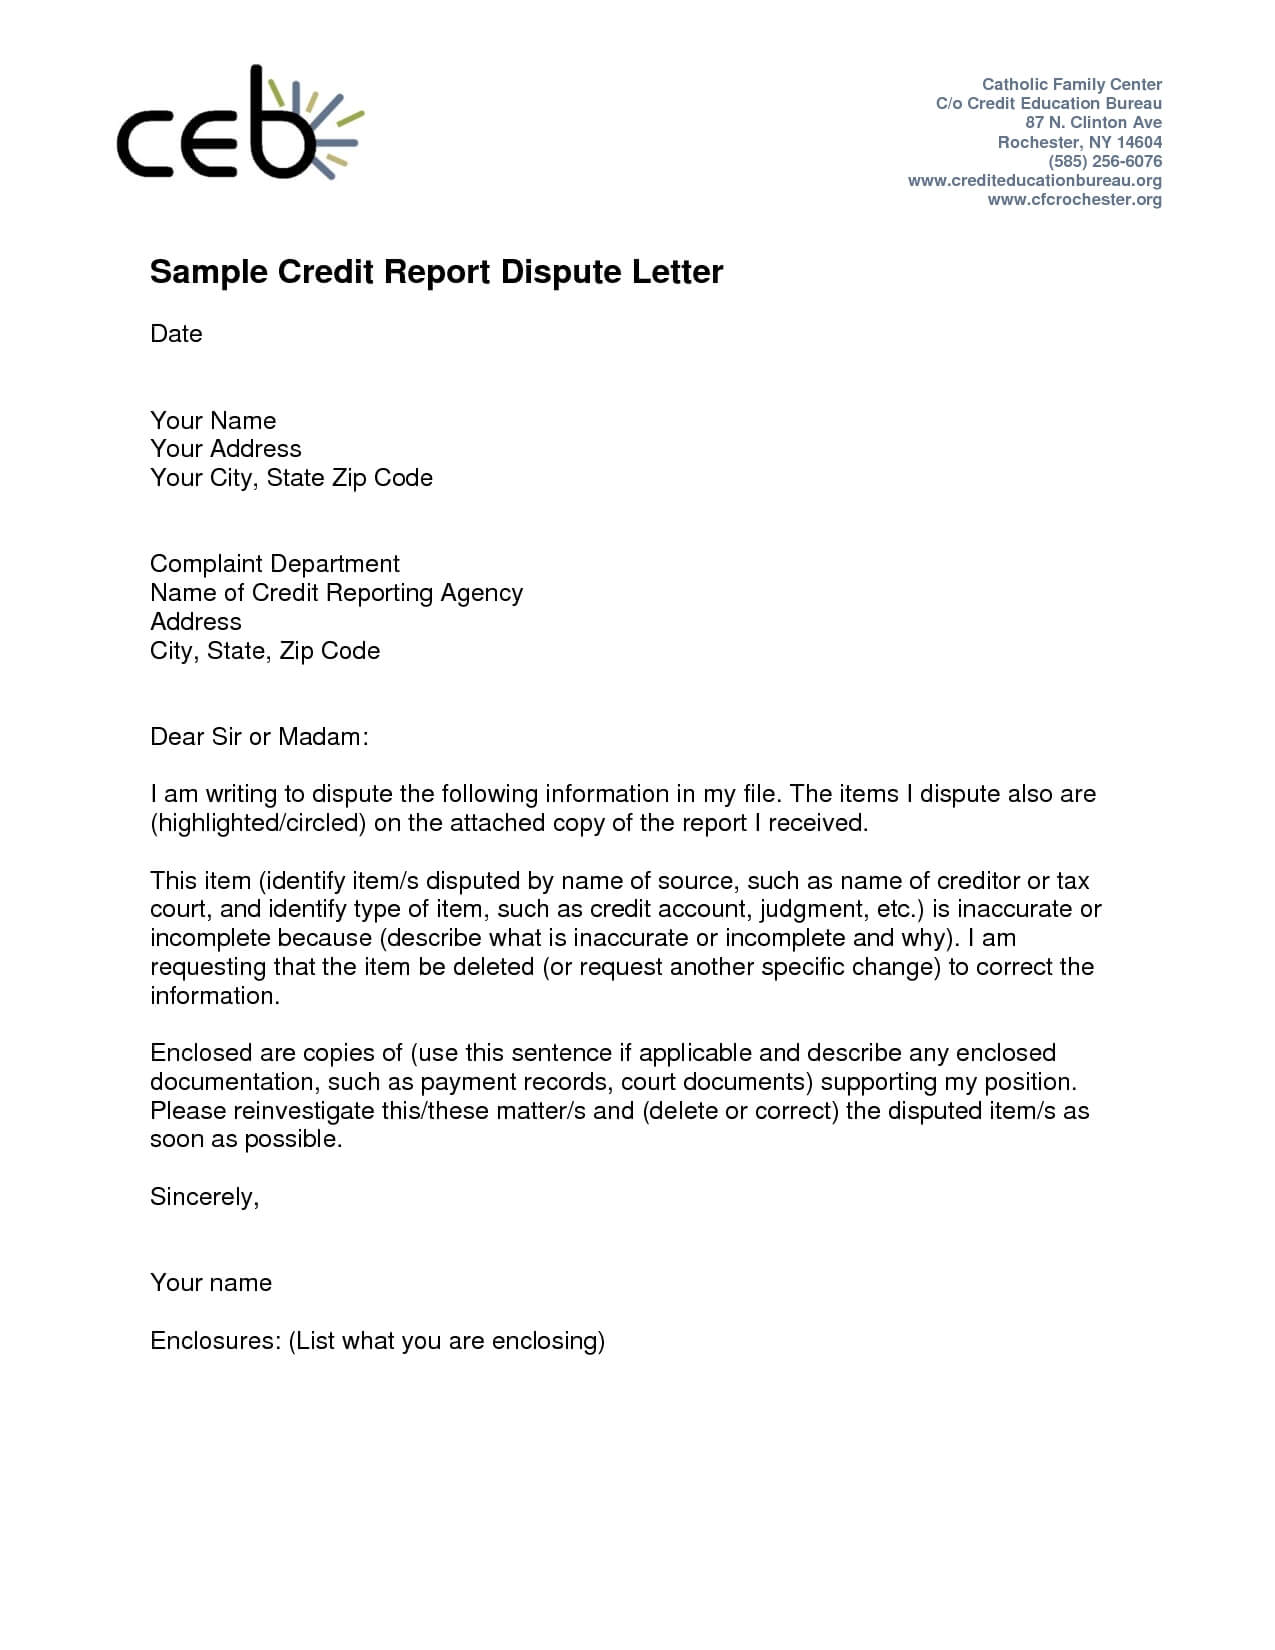 Report Examples Credit Dispute Letter Templates Acurnamedia Throughout 609 Dispute Letter Template